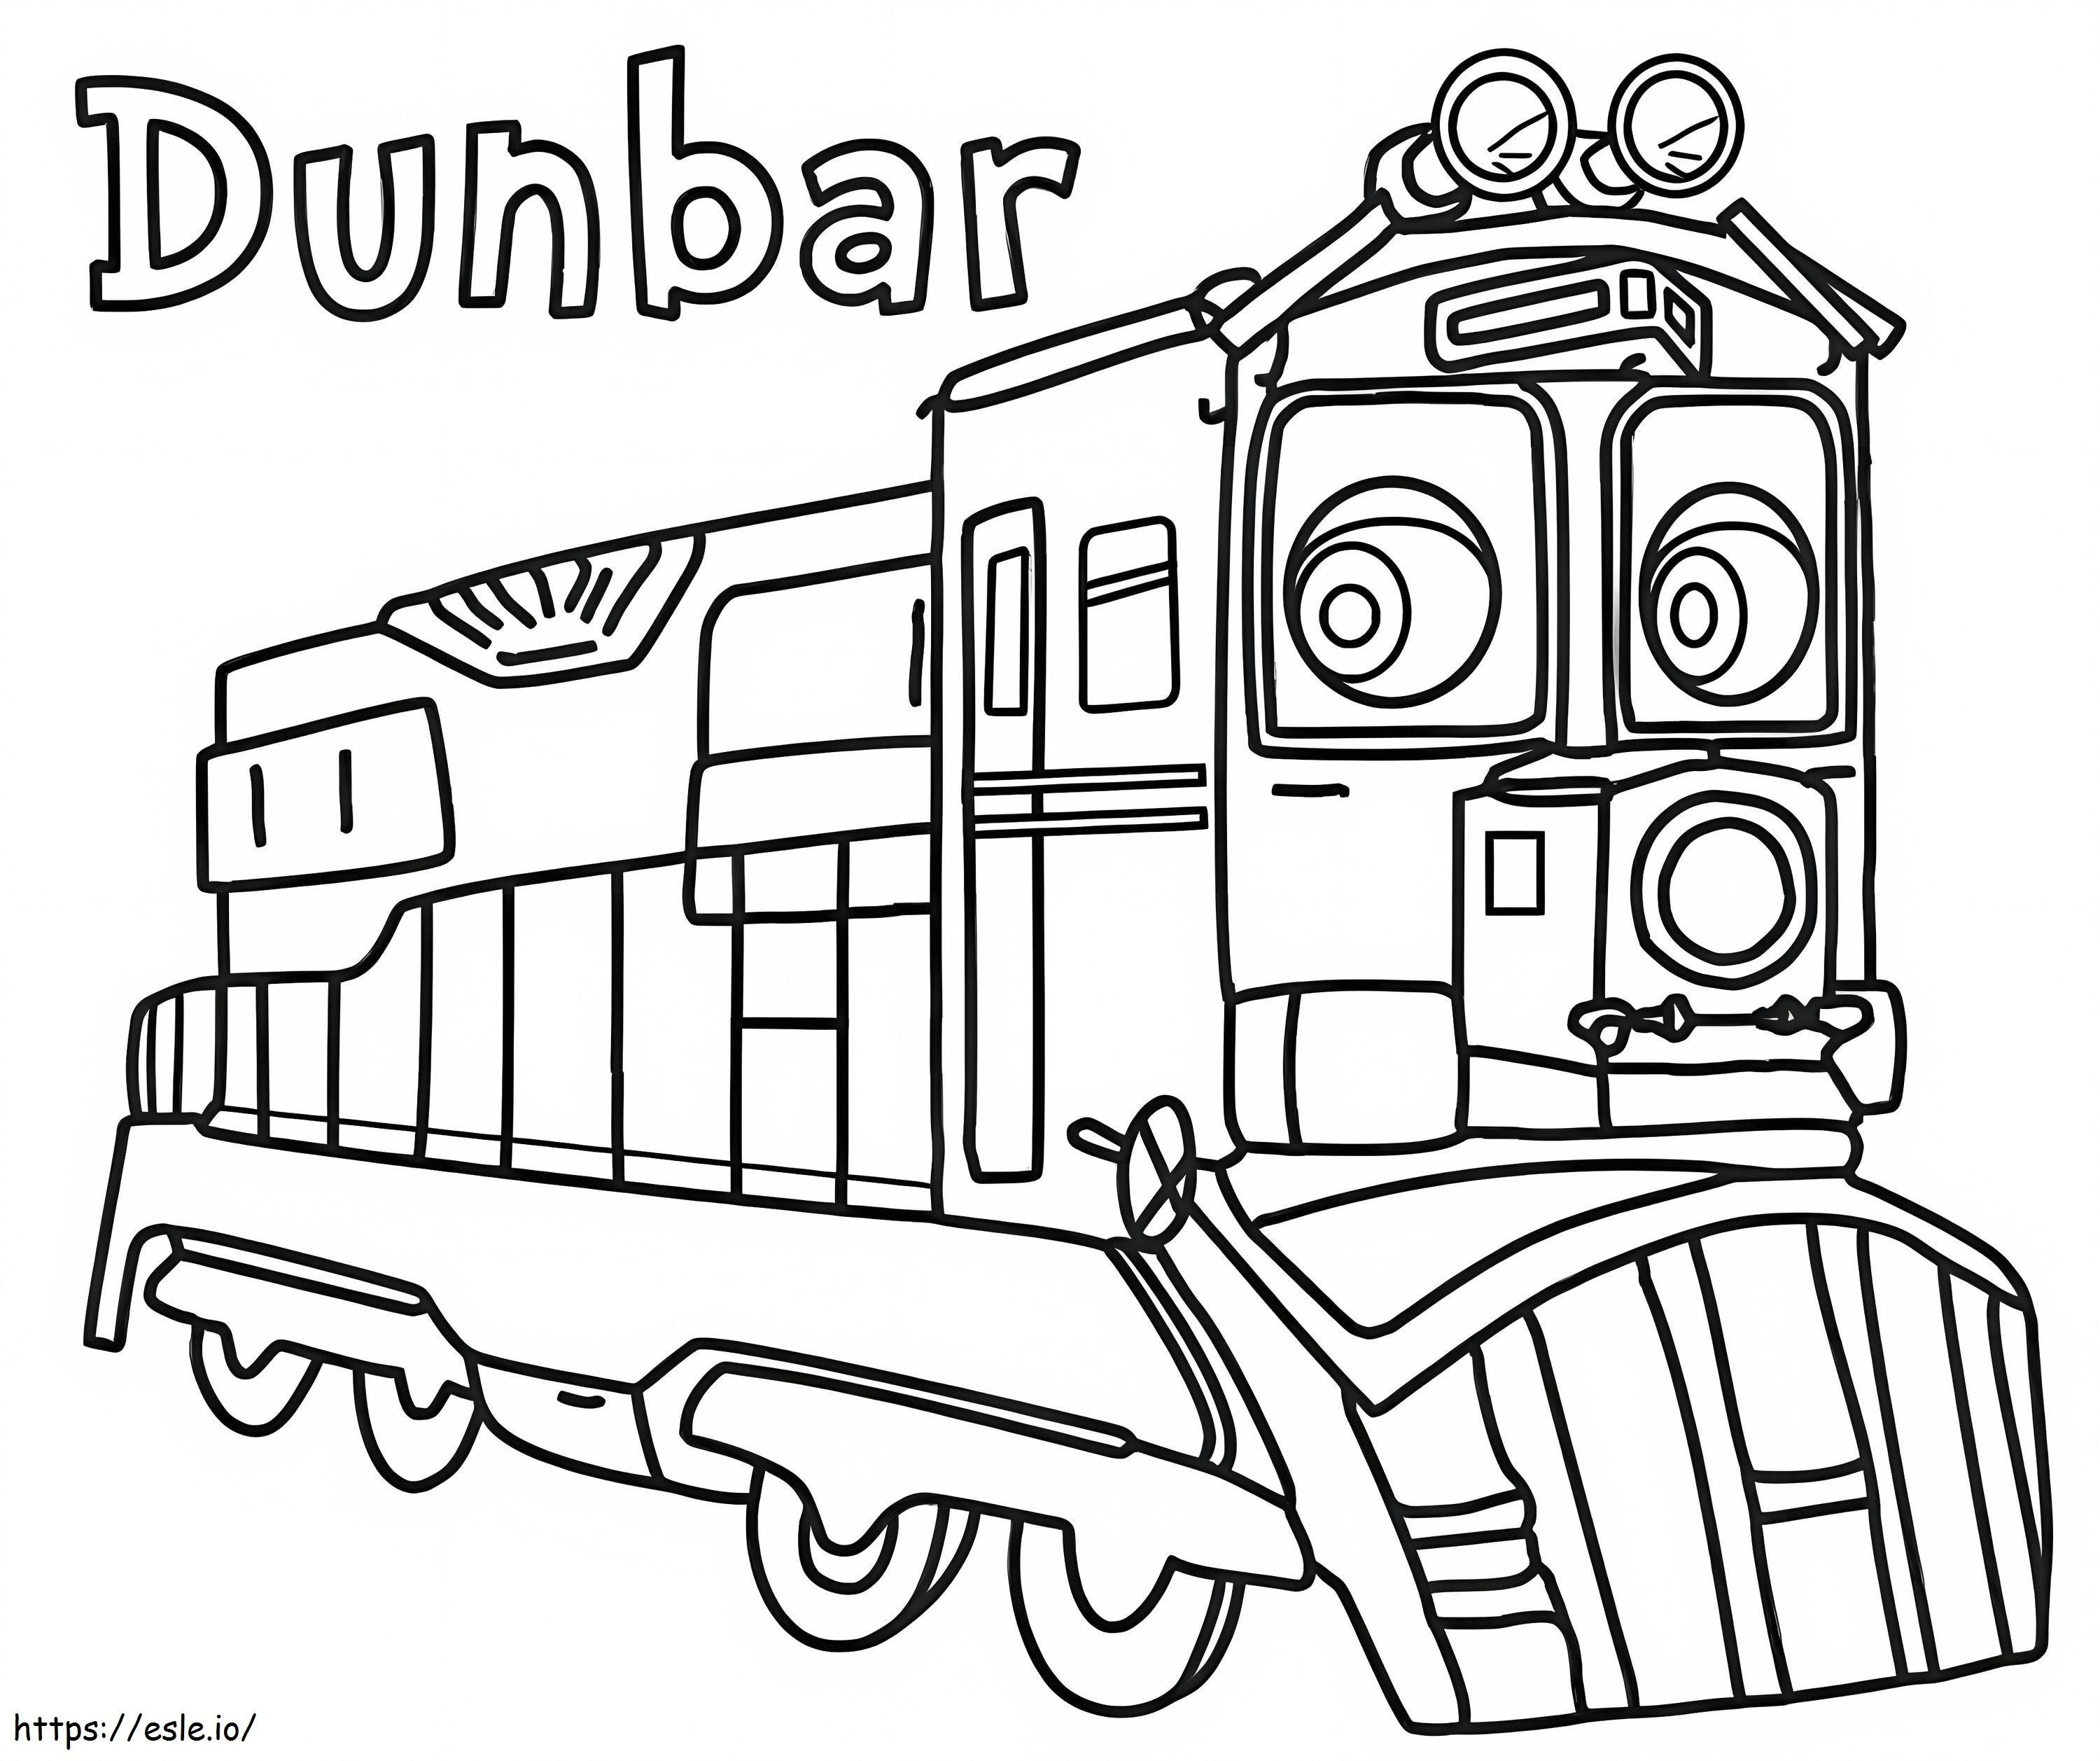 Dunbar De Chuggington boyama